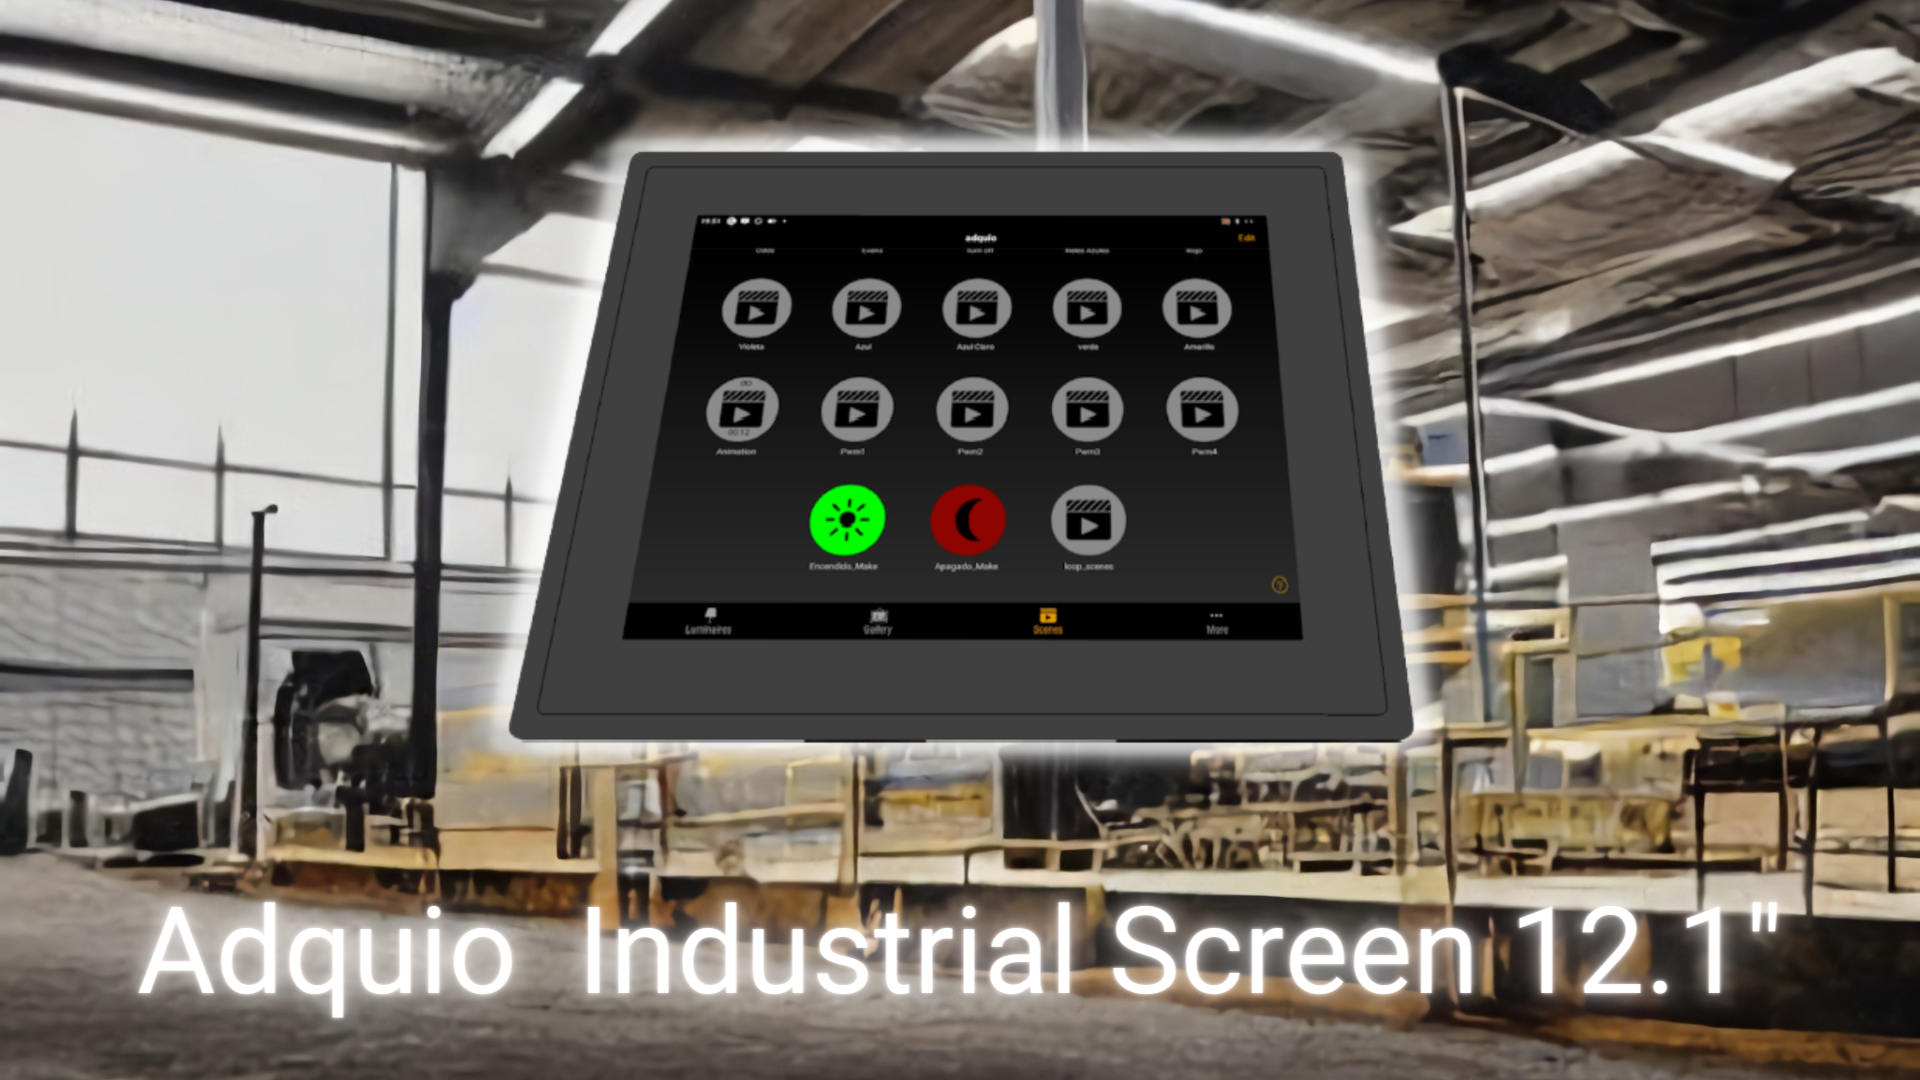 Adquio Industrial Screen